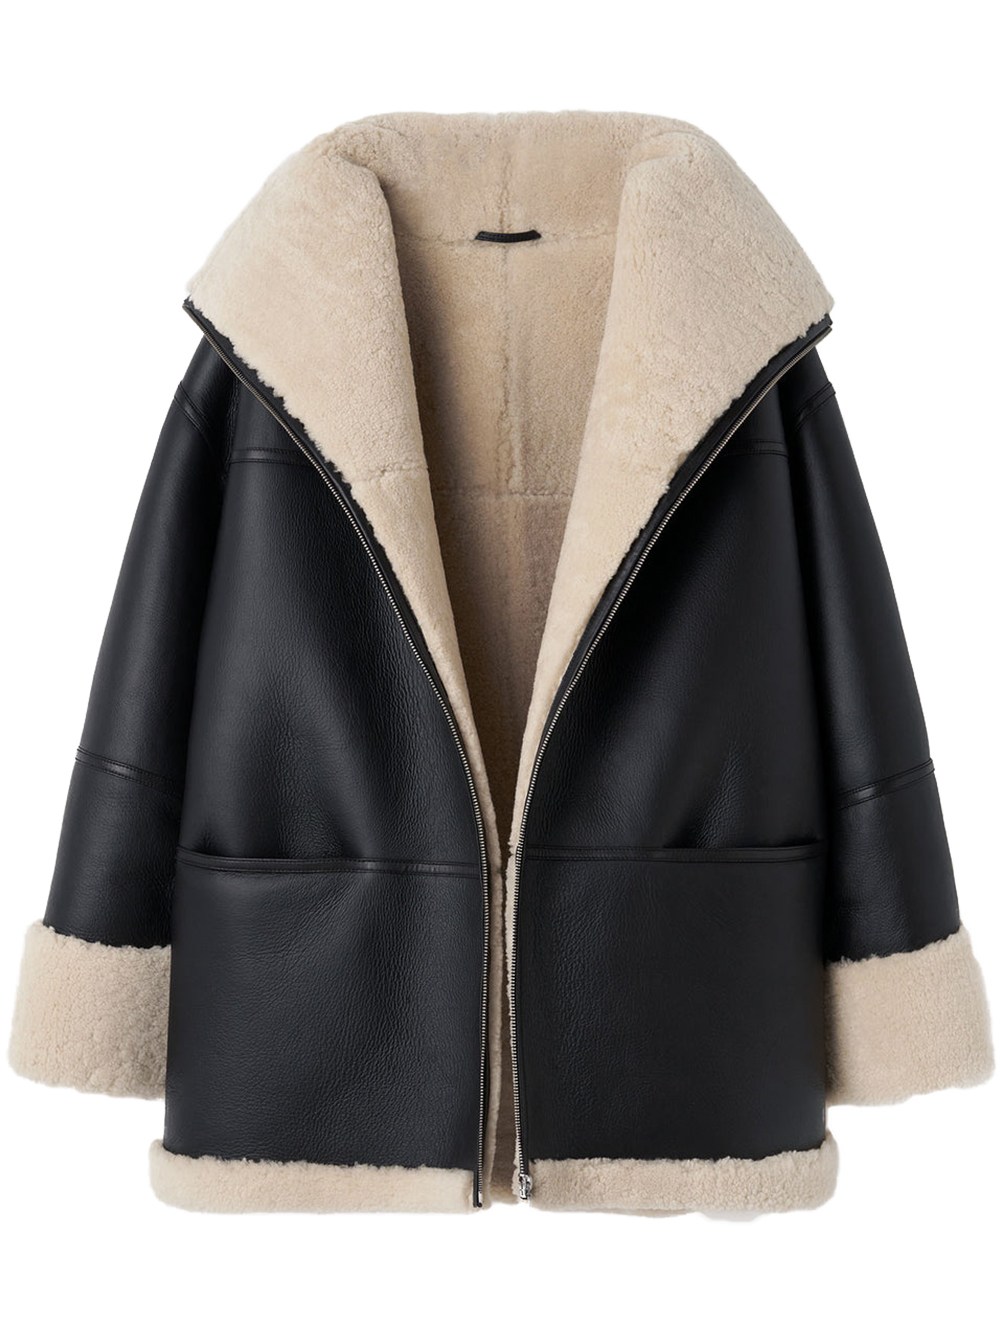 Toteme Signature shearling jacket (Size: XS/S) product